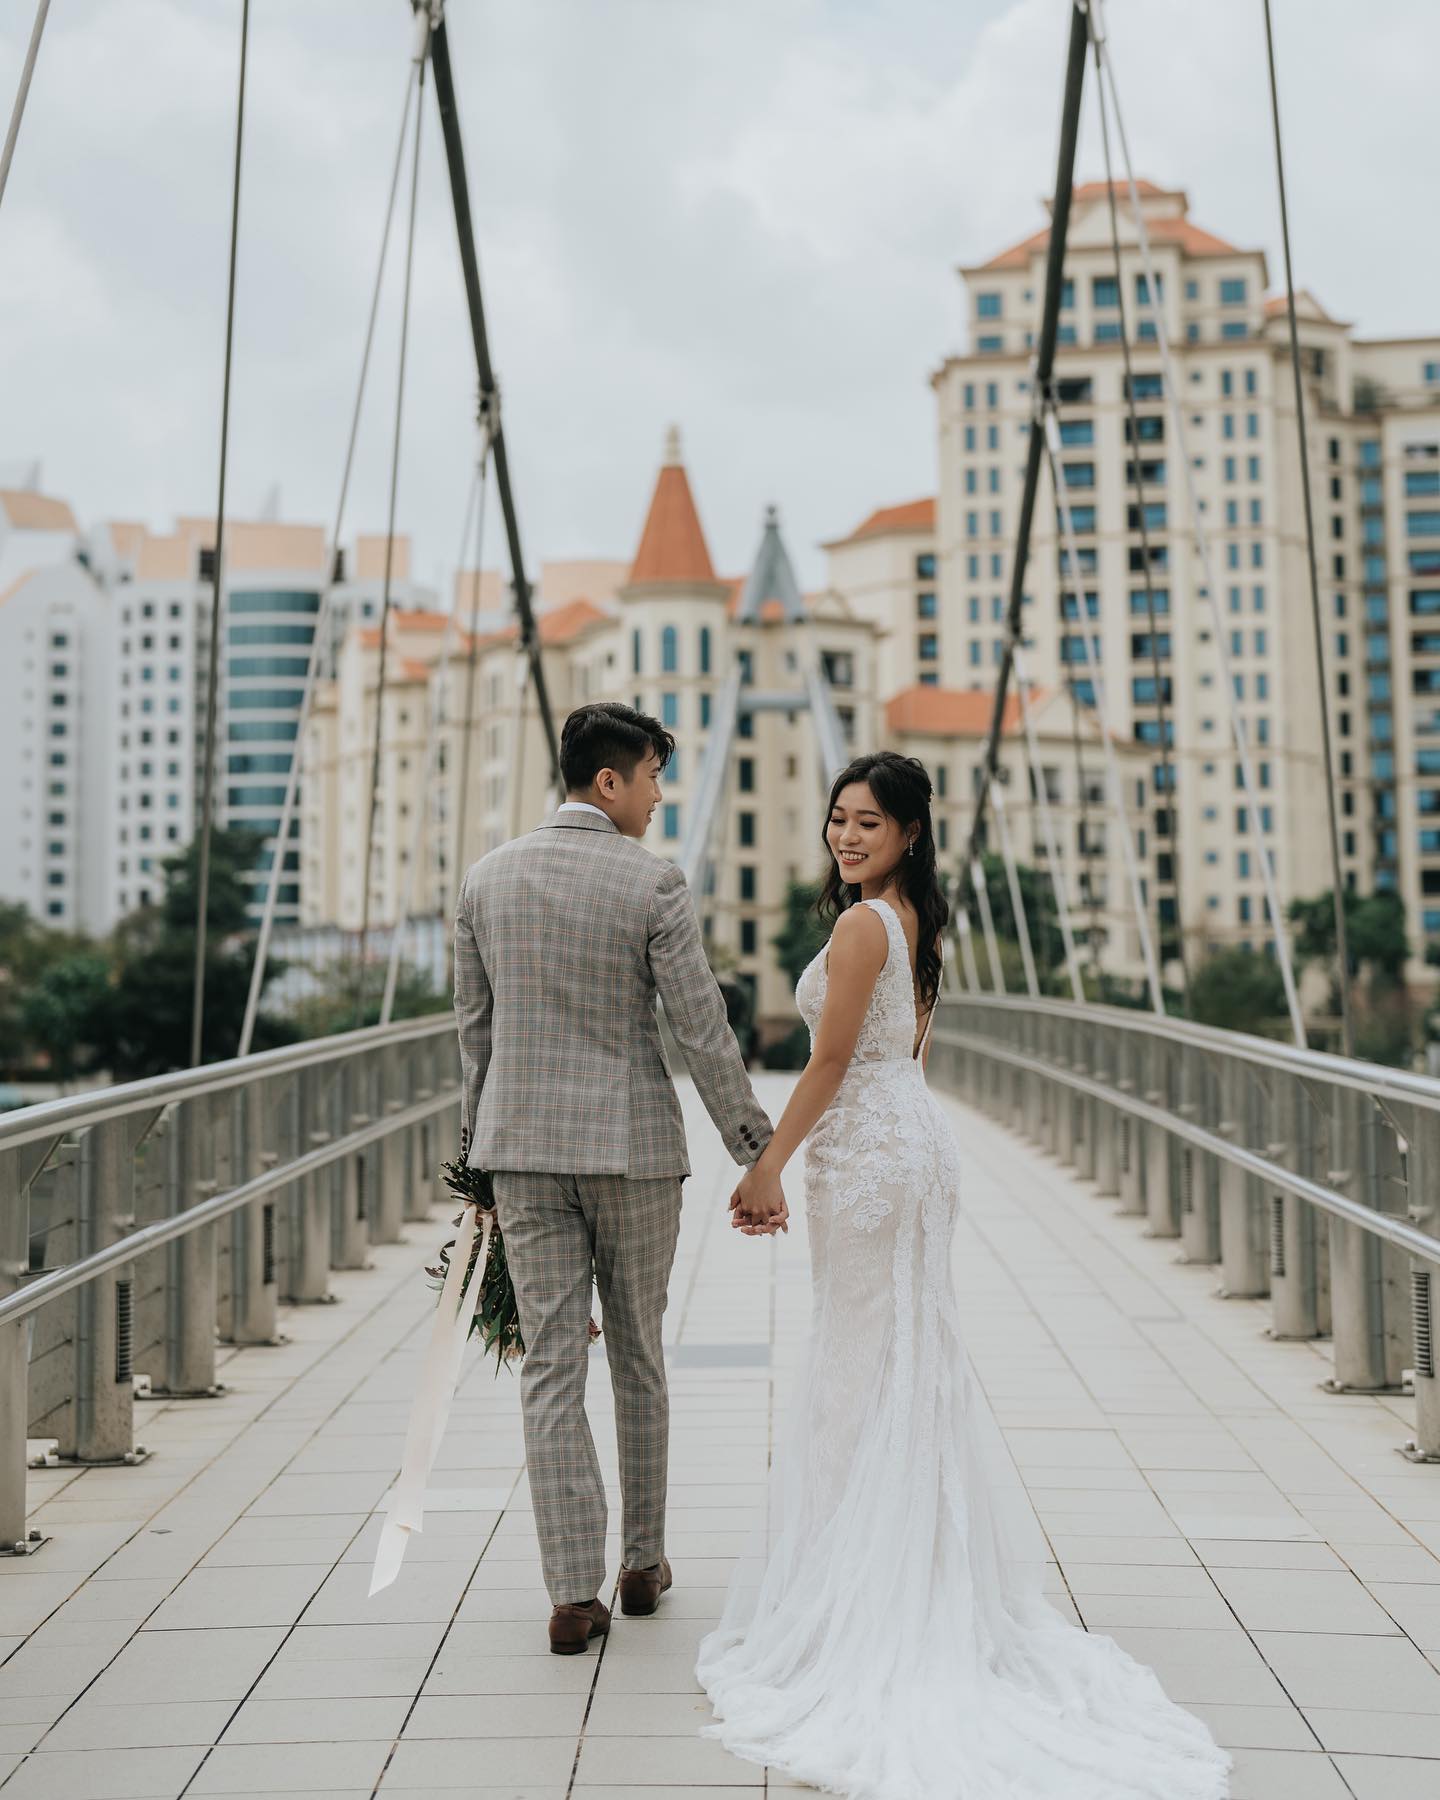 In The City of Love | Wei Jie & Sharlynn’s Pre Wedding Shoot